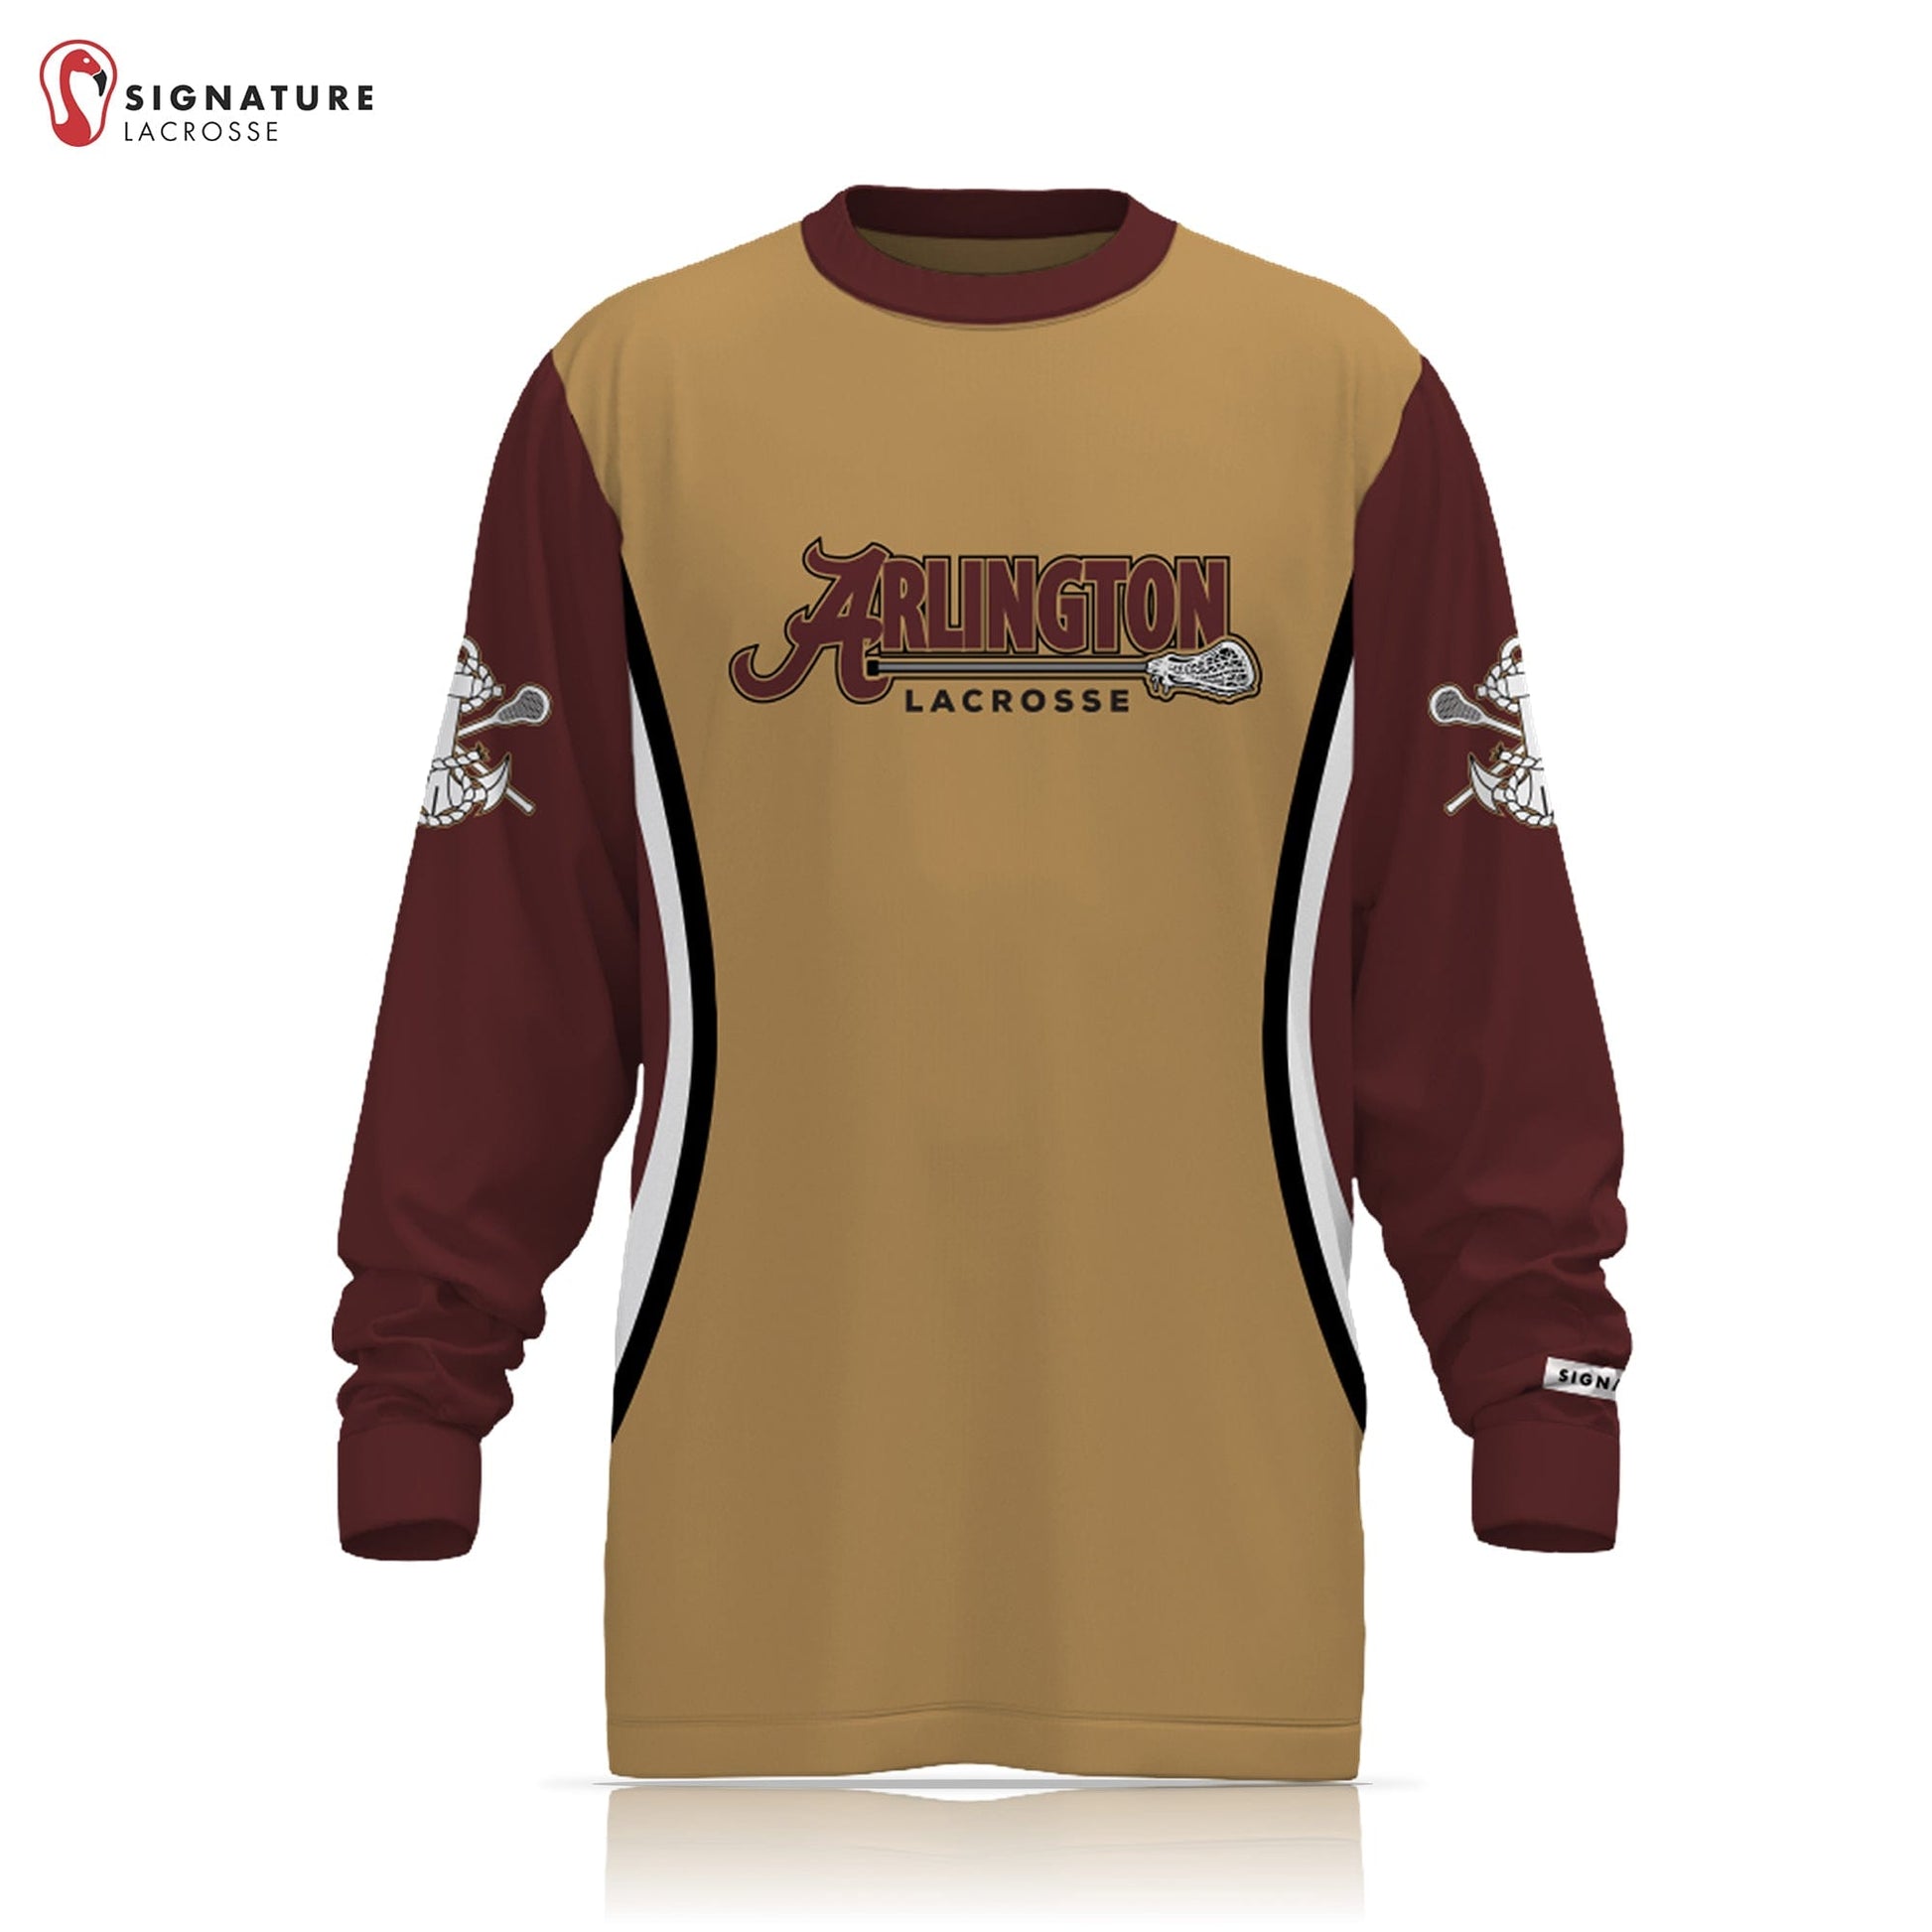 Arlington Lagrange Lacrosse Men's Long Sleeve Shooter Shirt: 3-4 Signature Lacrosse